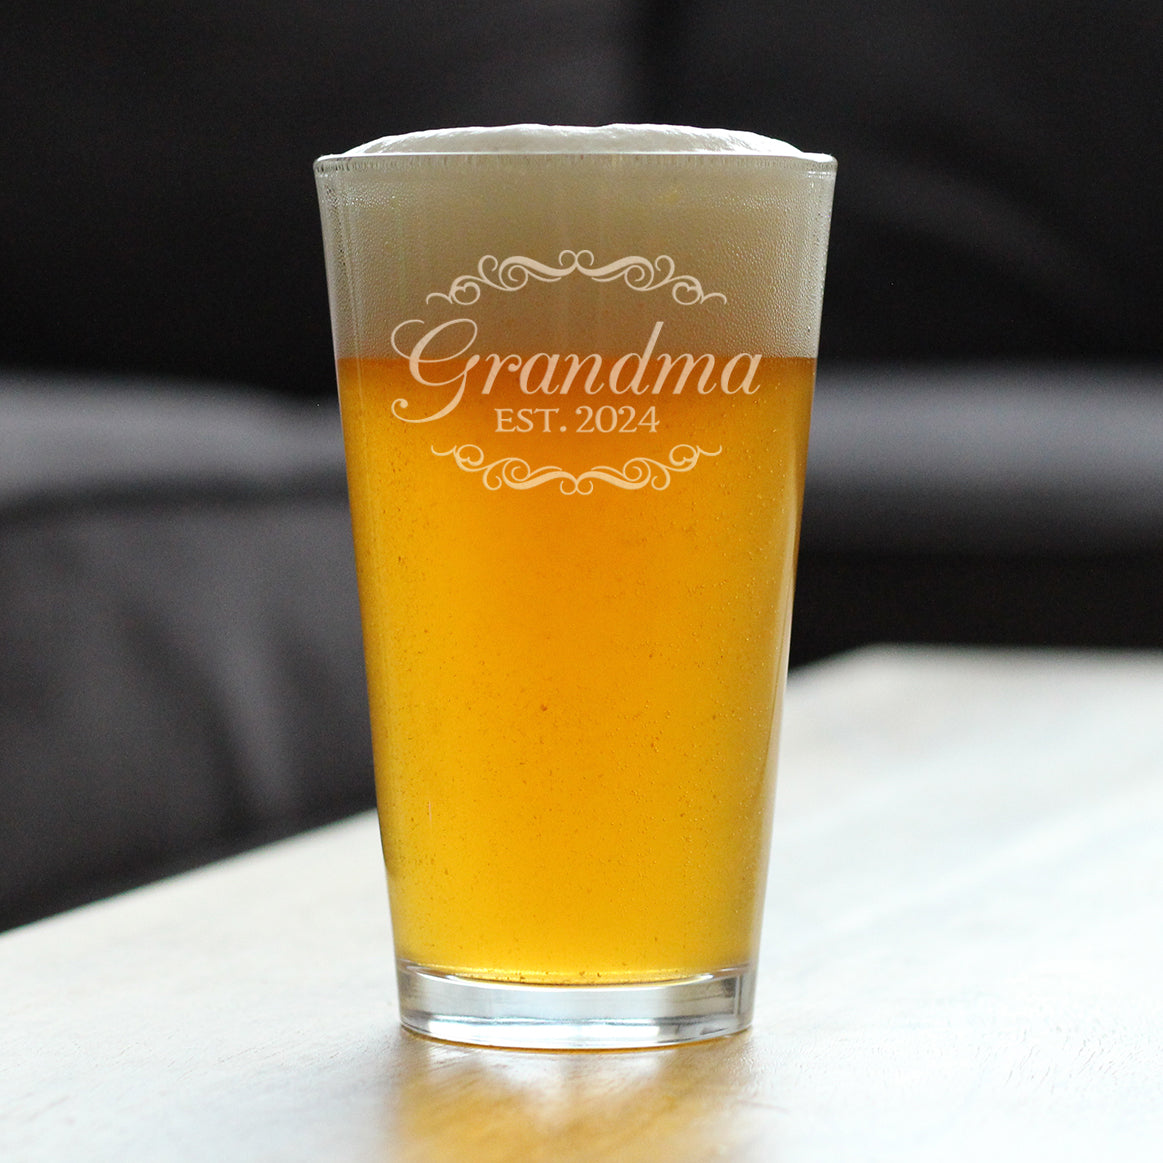 Grandma Est 2024 - New Grandmother Pint Glass Gift for First Time Grandparents - Decorative 16 Oz Glasses